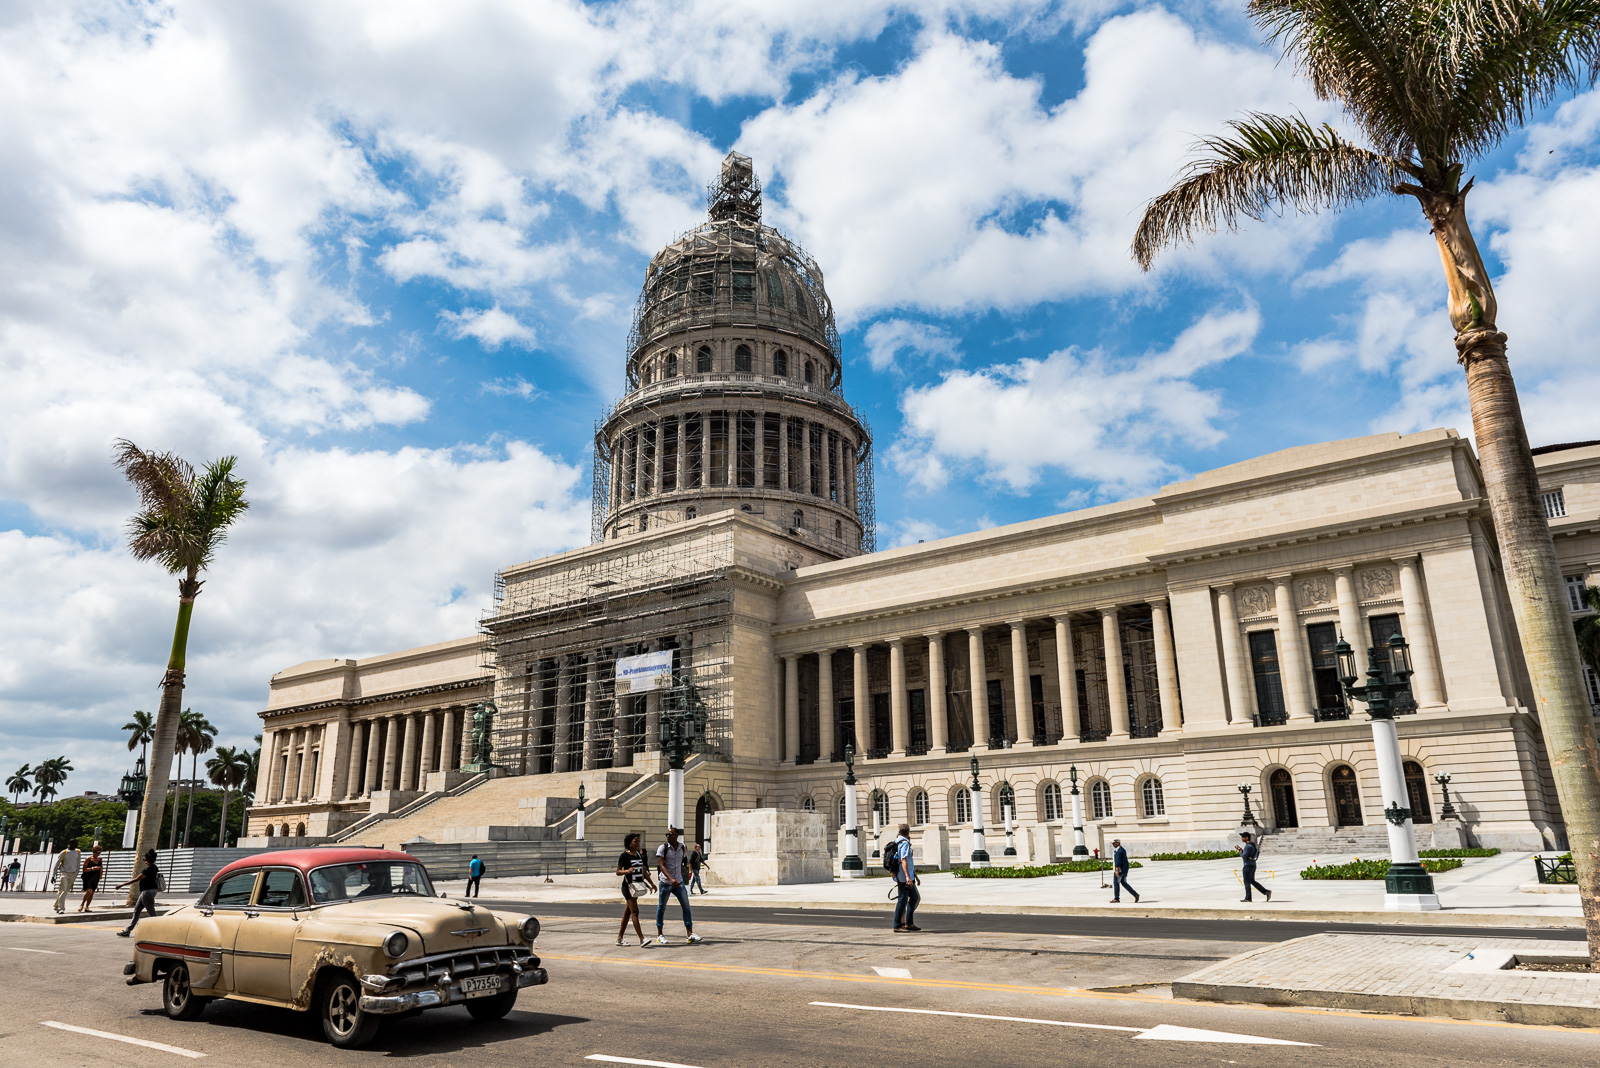 El Capitolio in Old Havana